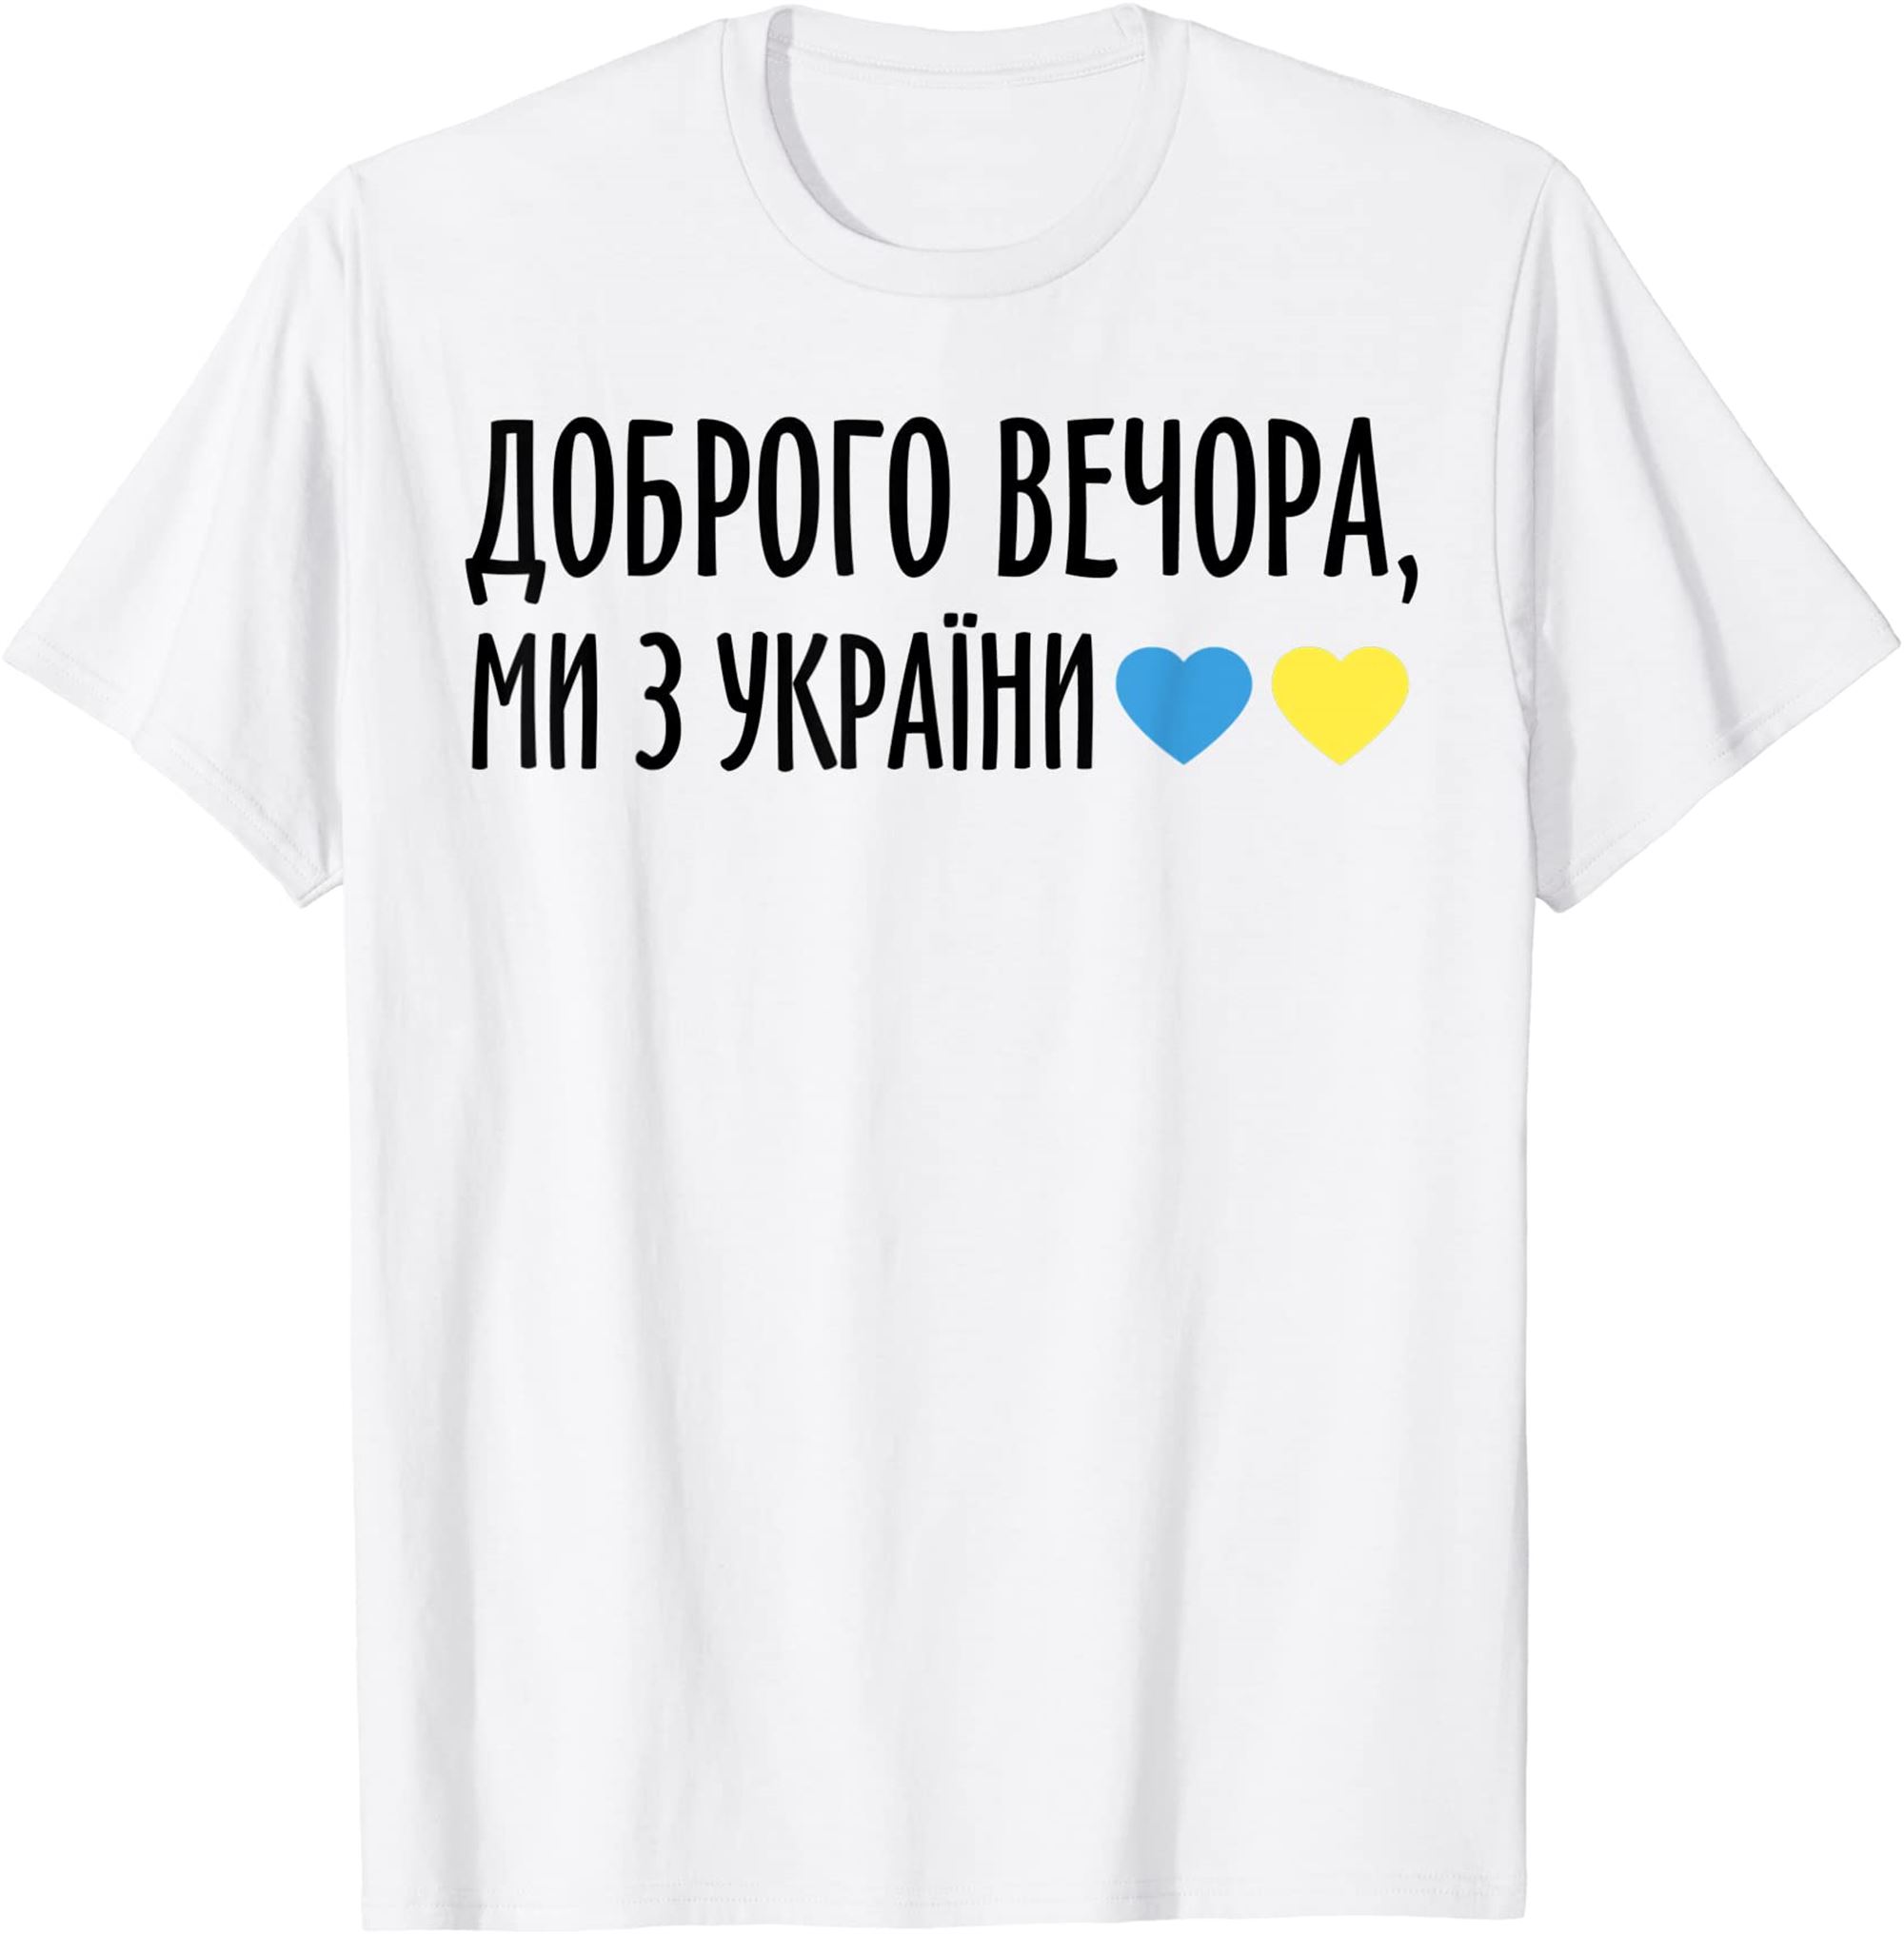 We Are From Ukraine Flag Ukrainian Quote Ukrainian Shirt T-shirt Size Up To 5xl